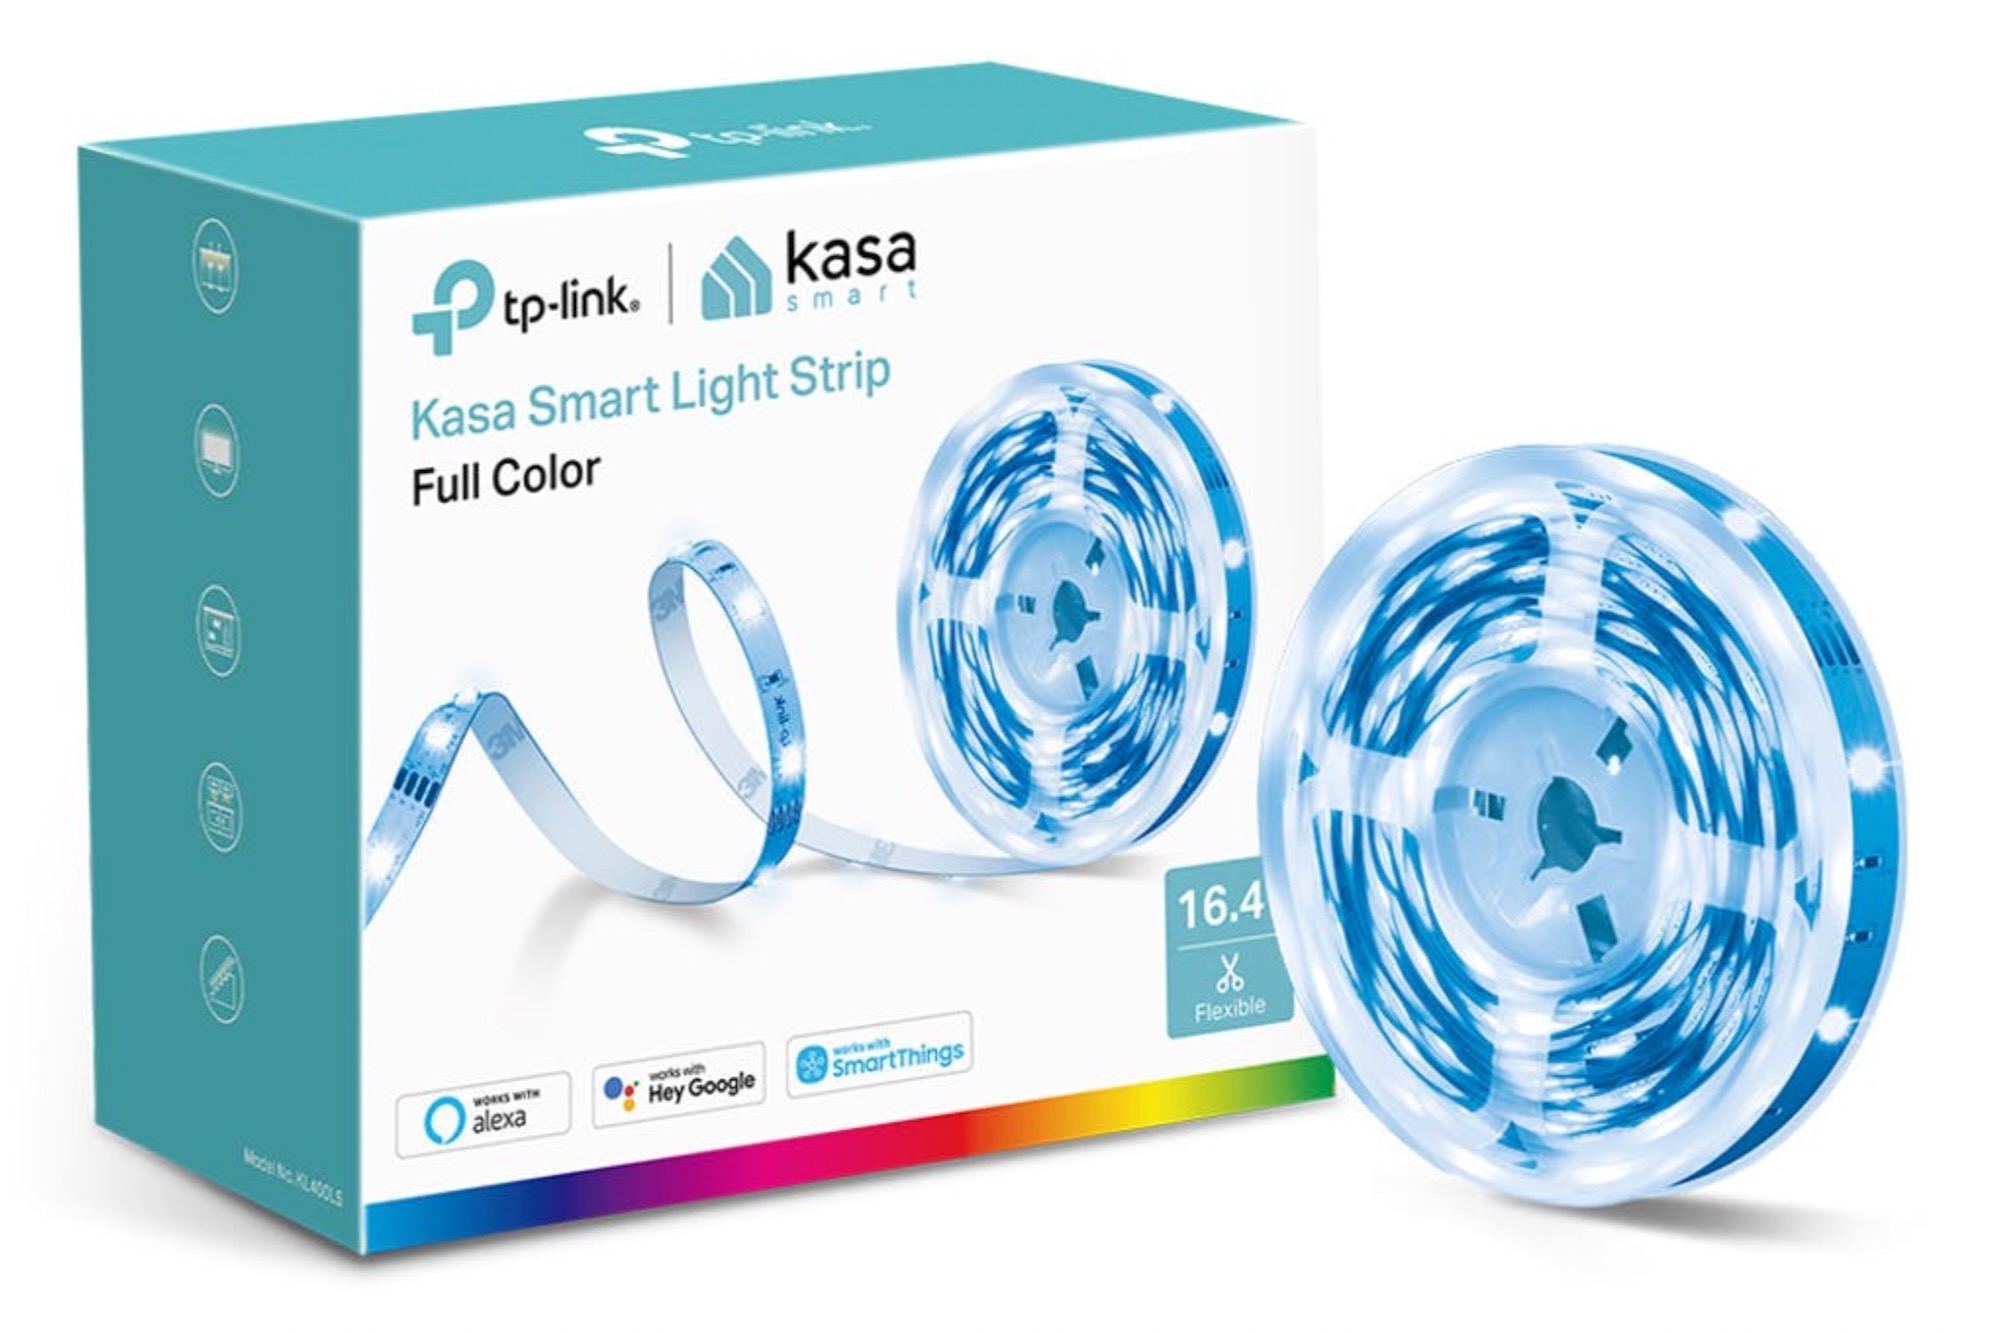 TP-Link Kasa Smart Light Strip KL400L5 -- Best LED light strip, runner-up